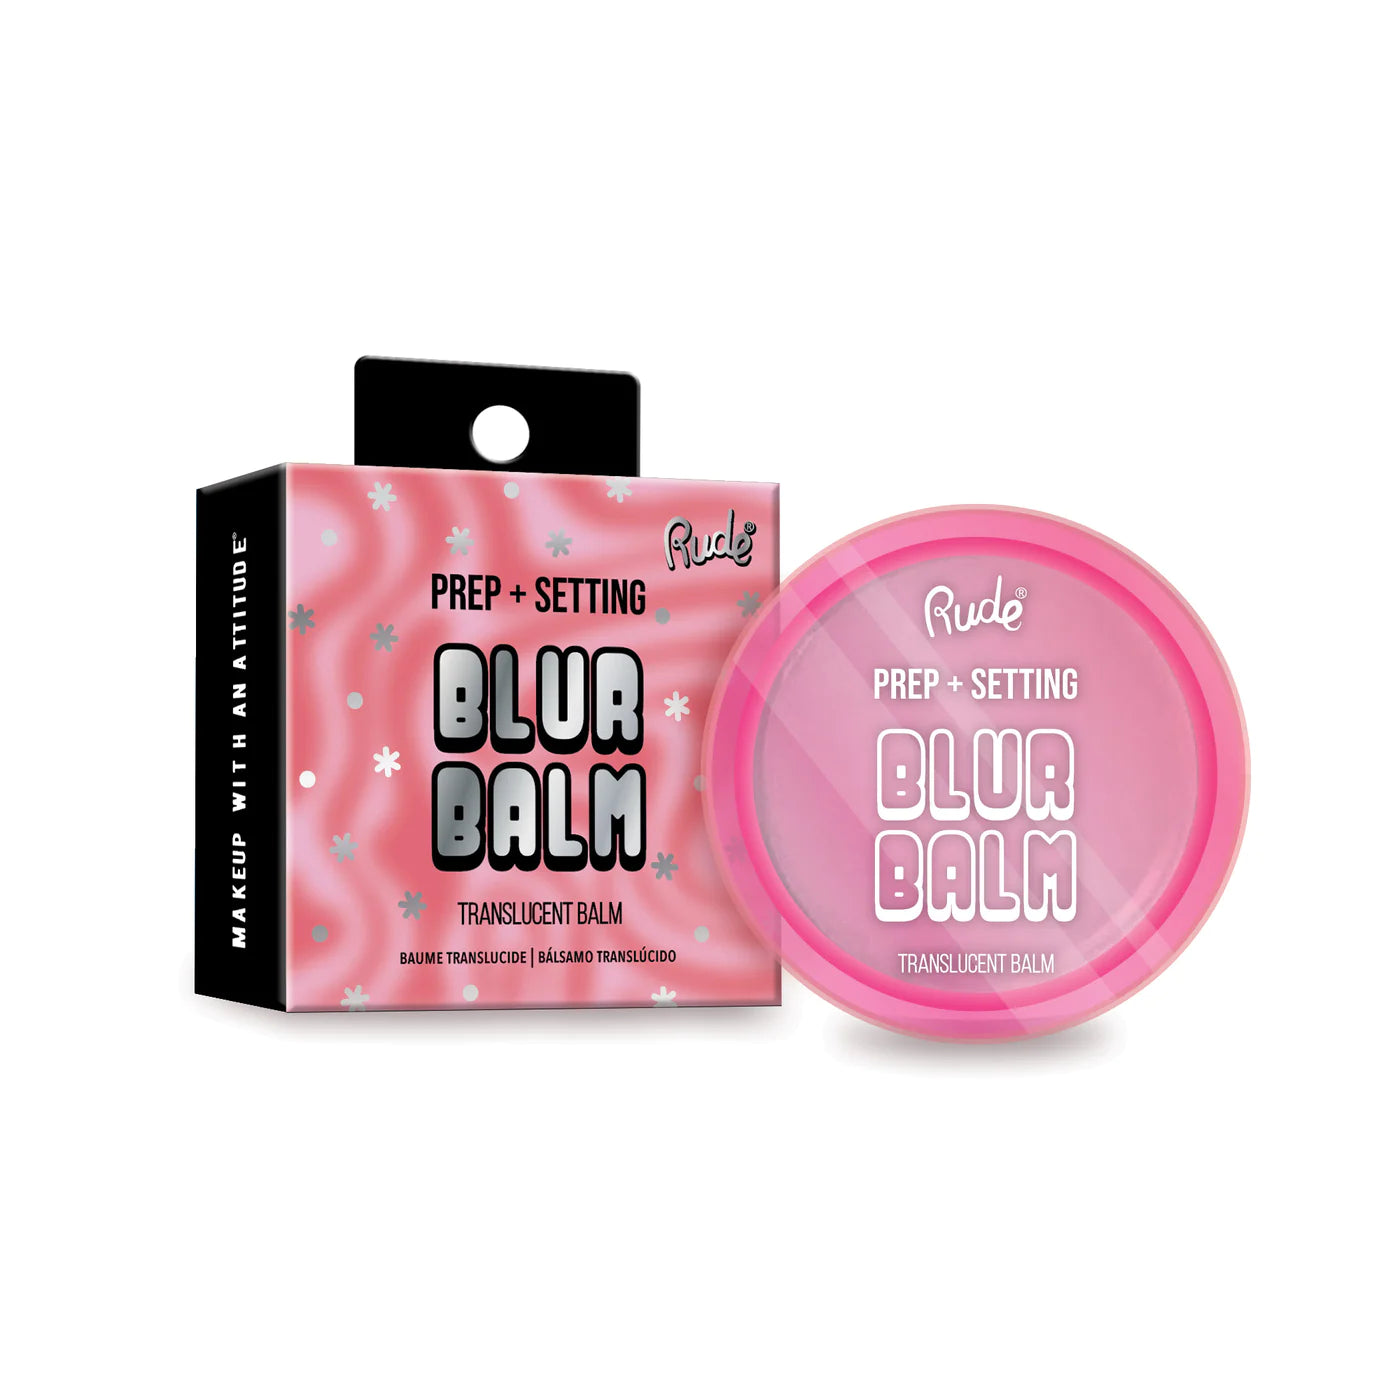 Rude Cosmetics - Blur Balm Prep + Setting Translucent Balm